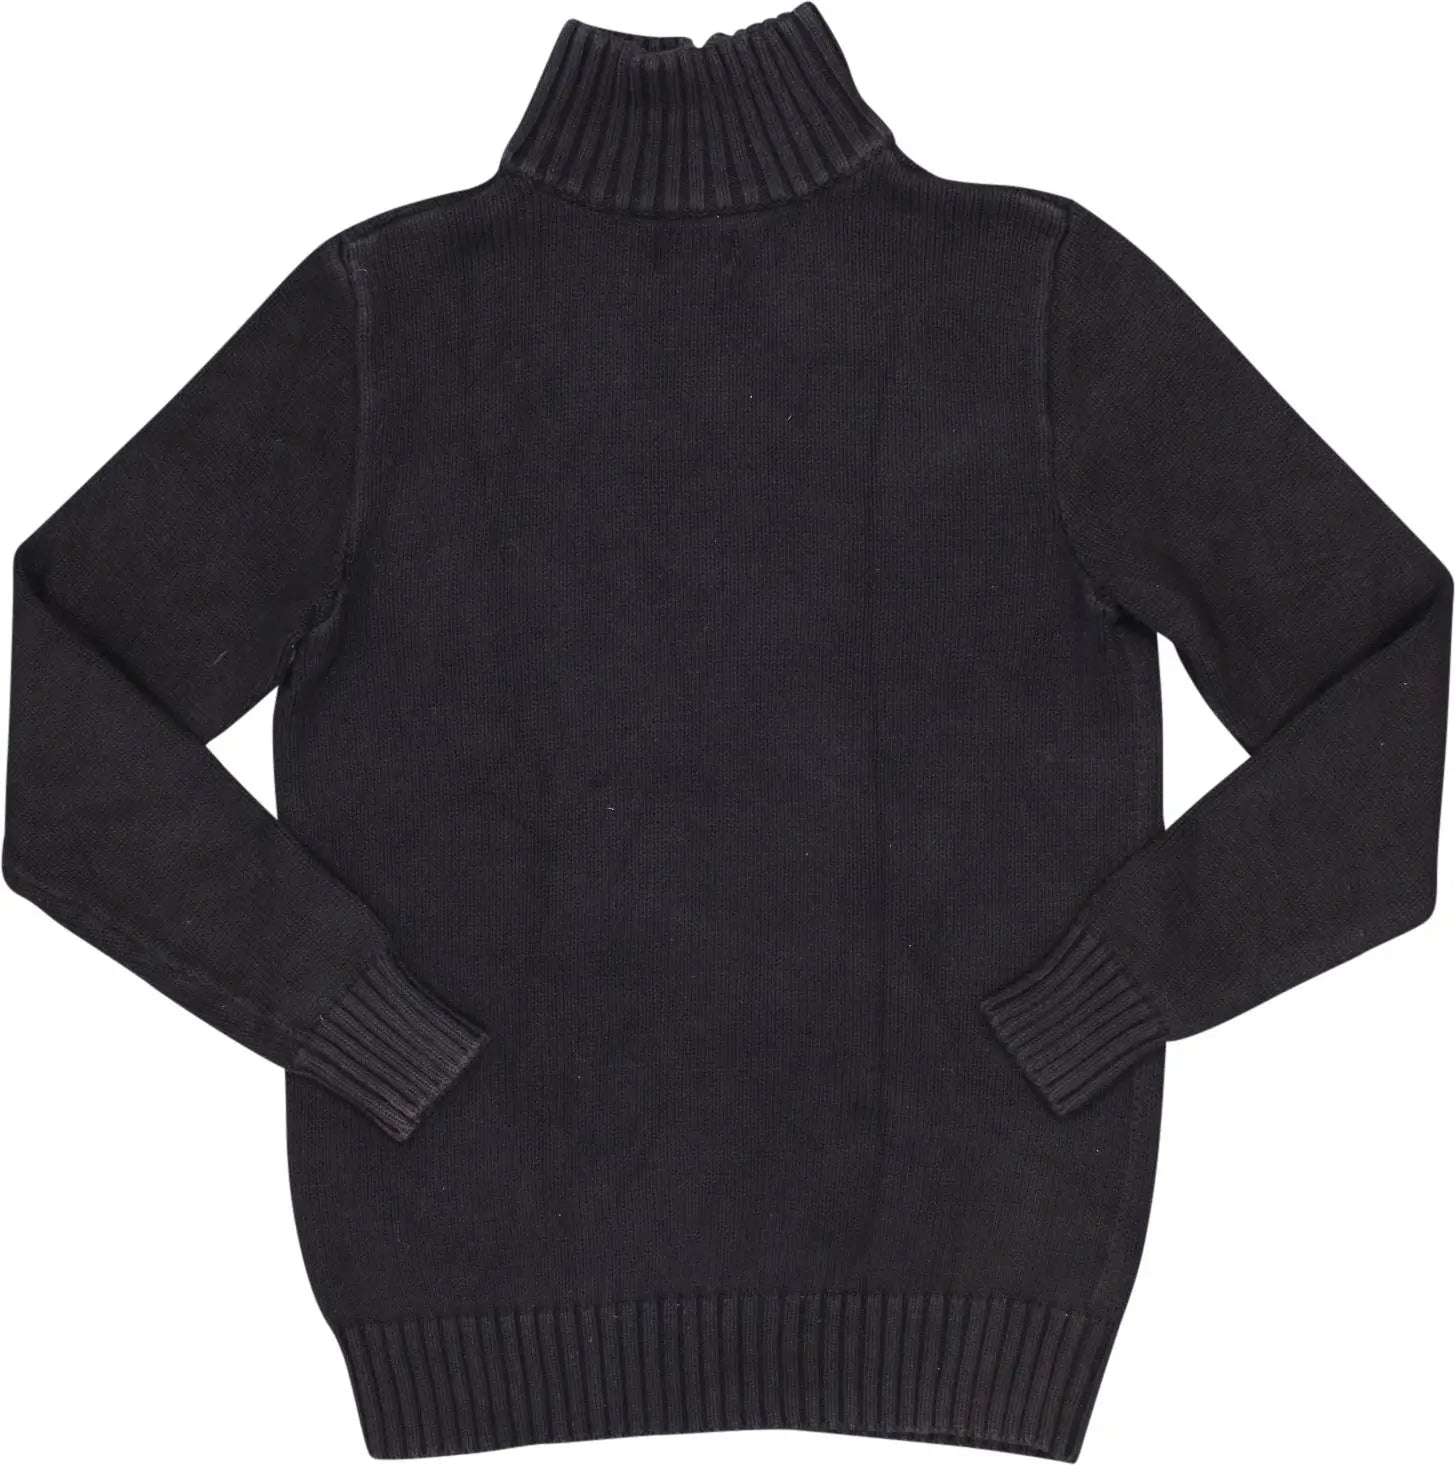 Ralph Lauren - Black Sweater by Ralph Lauren- ThriftTale.com - Vintage and second handclothing